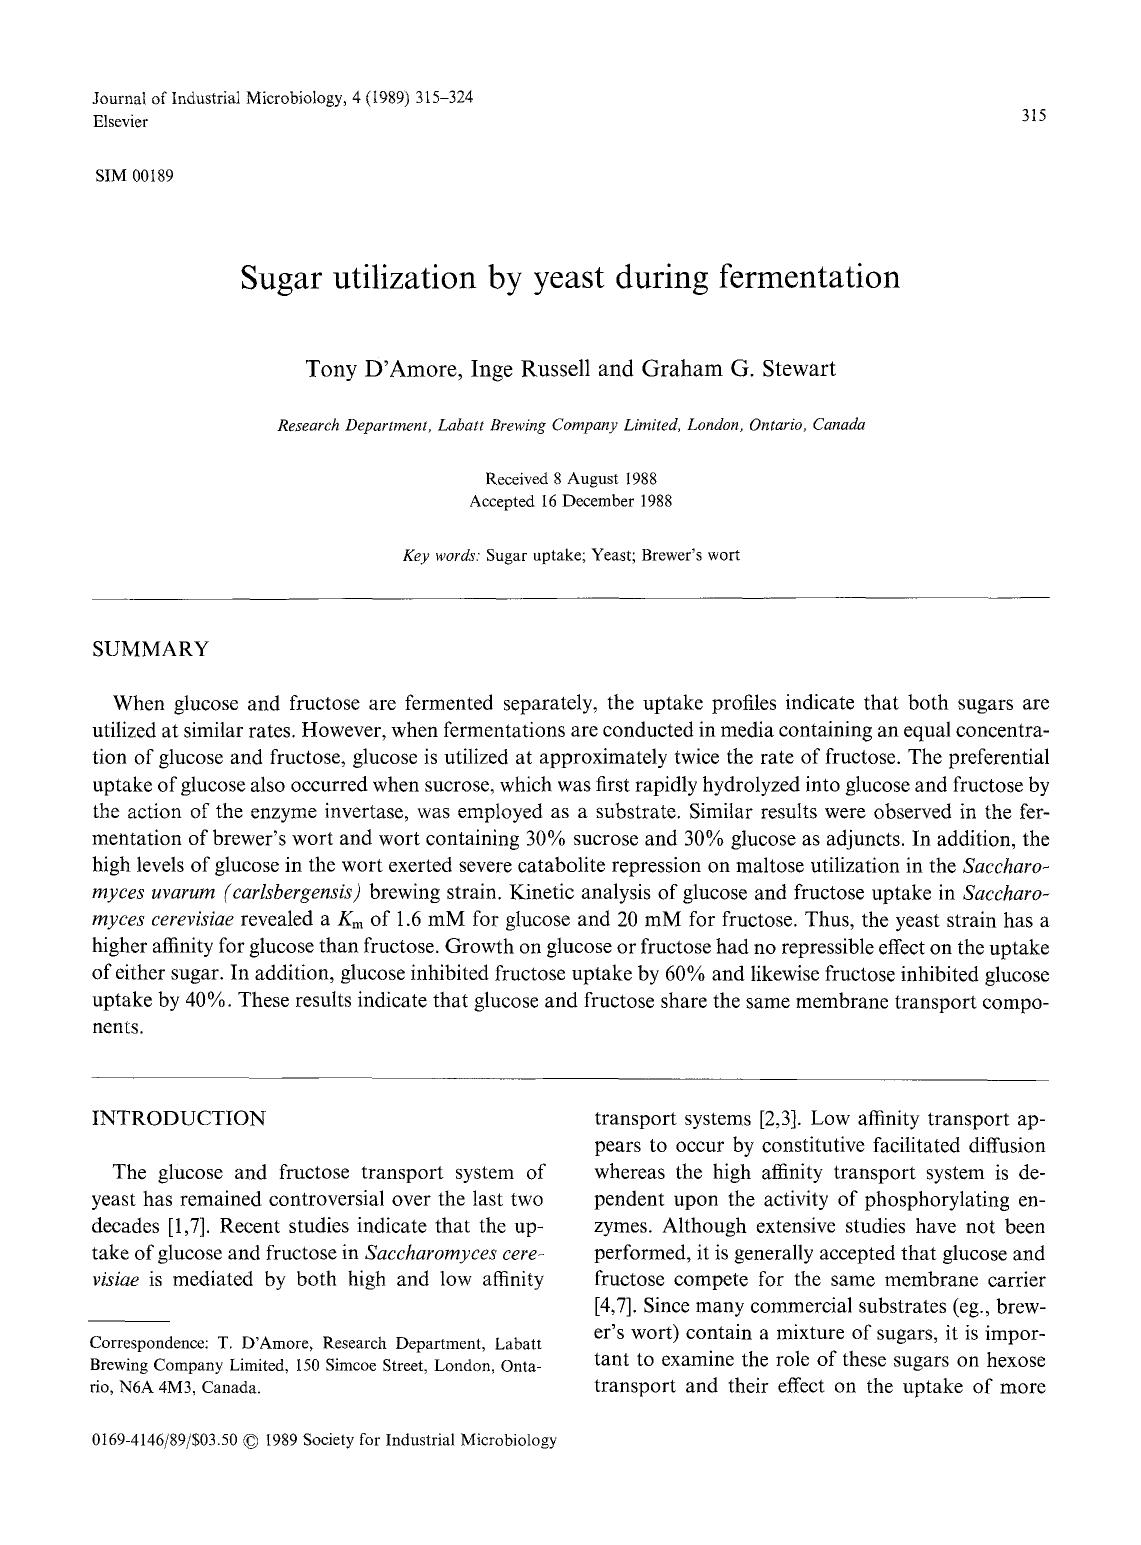 Sugar utilization by yeast during fermentation by Unknown